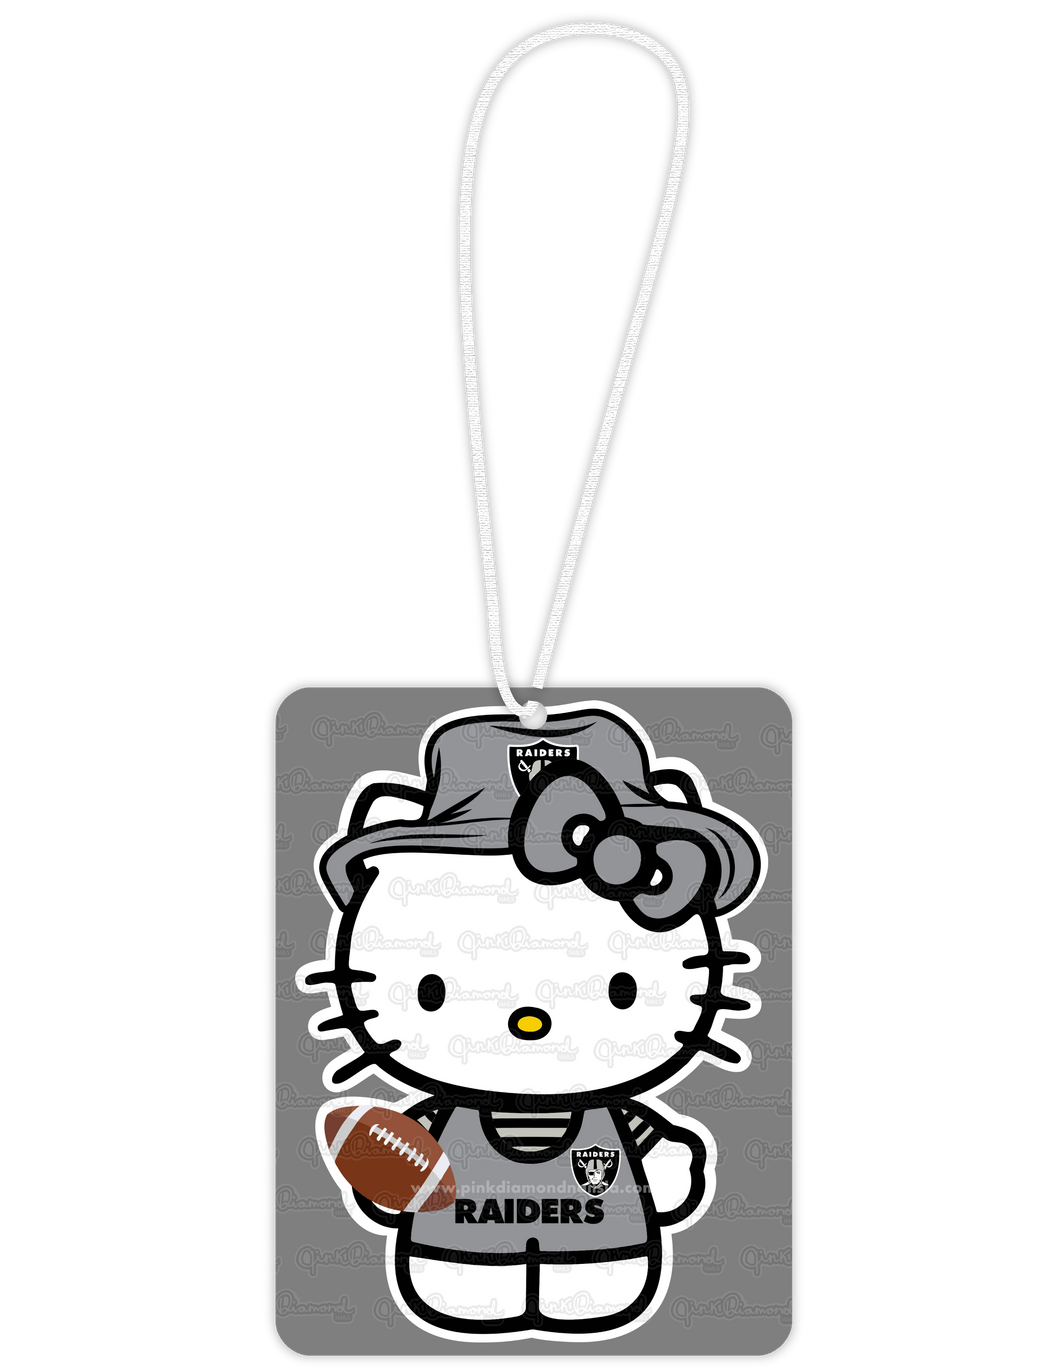 Hello raiders kitty- Hangable ornament